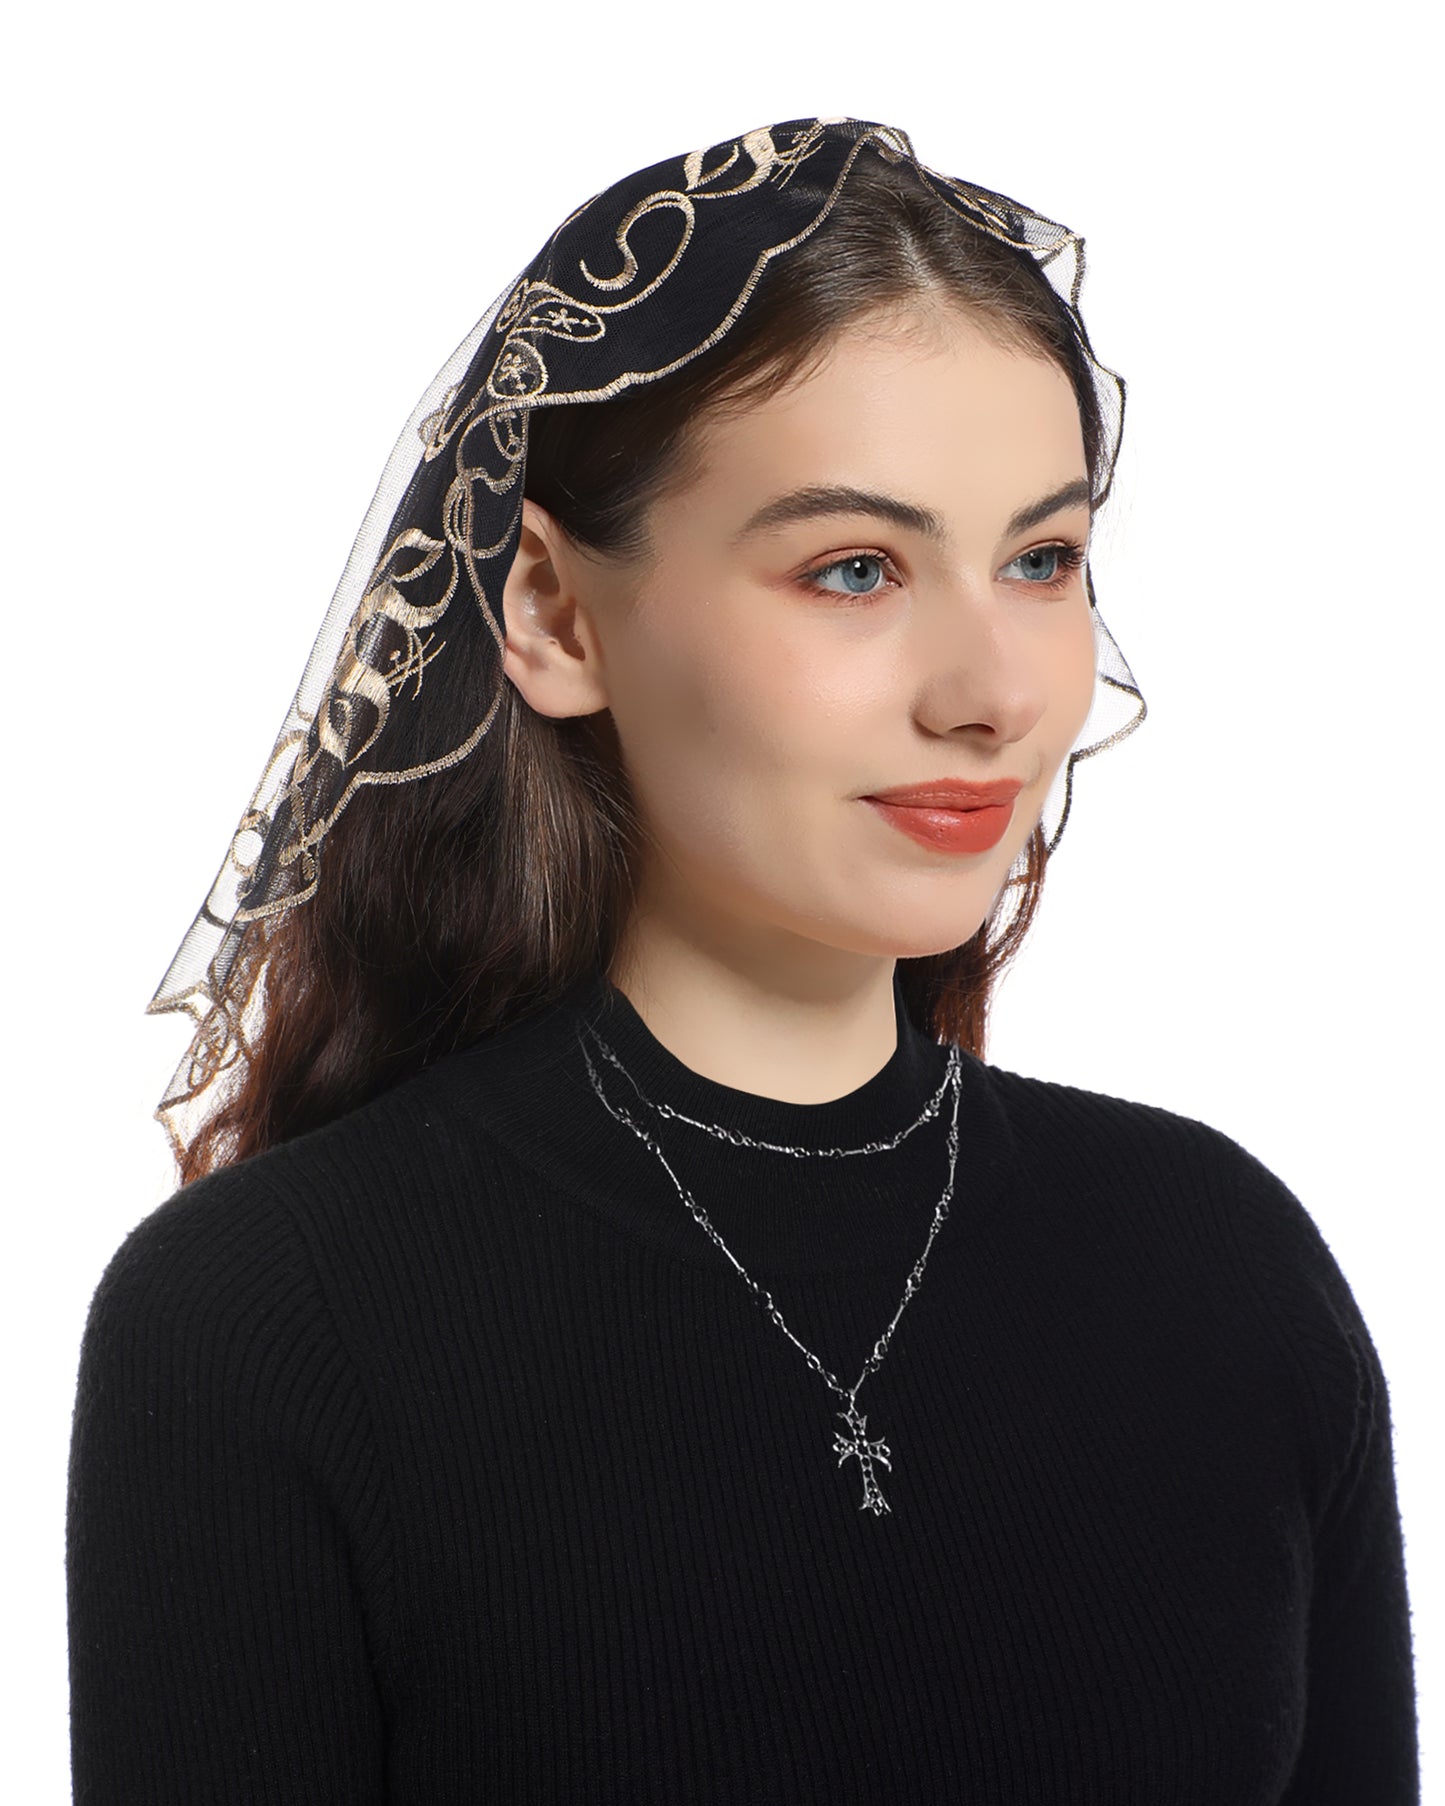 Bozidol Women Chapel Veils Mantilla - Church Veils Cross Embroidery Lace Round Shaped Head Coverings for Baptism (Blcak Gold)